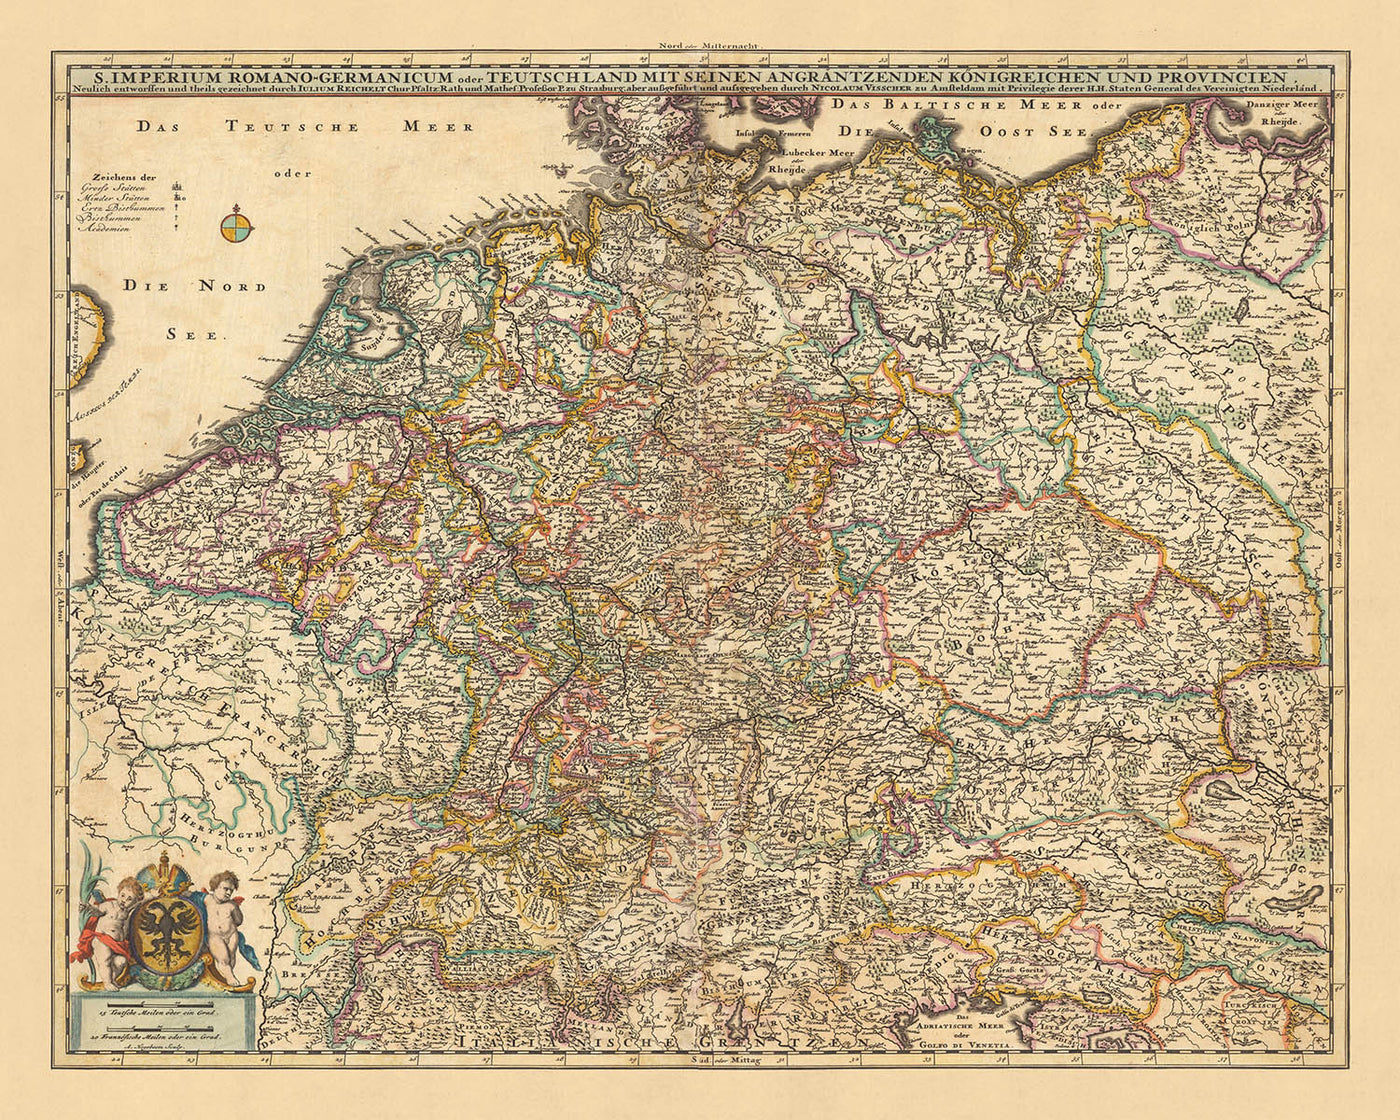 Old Map of Holy Roman Empire by Nicolaes Visscher II, 1690: Paris, Berlin, Brussels, Amsterdam, Vienna